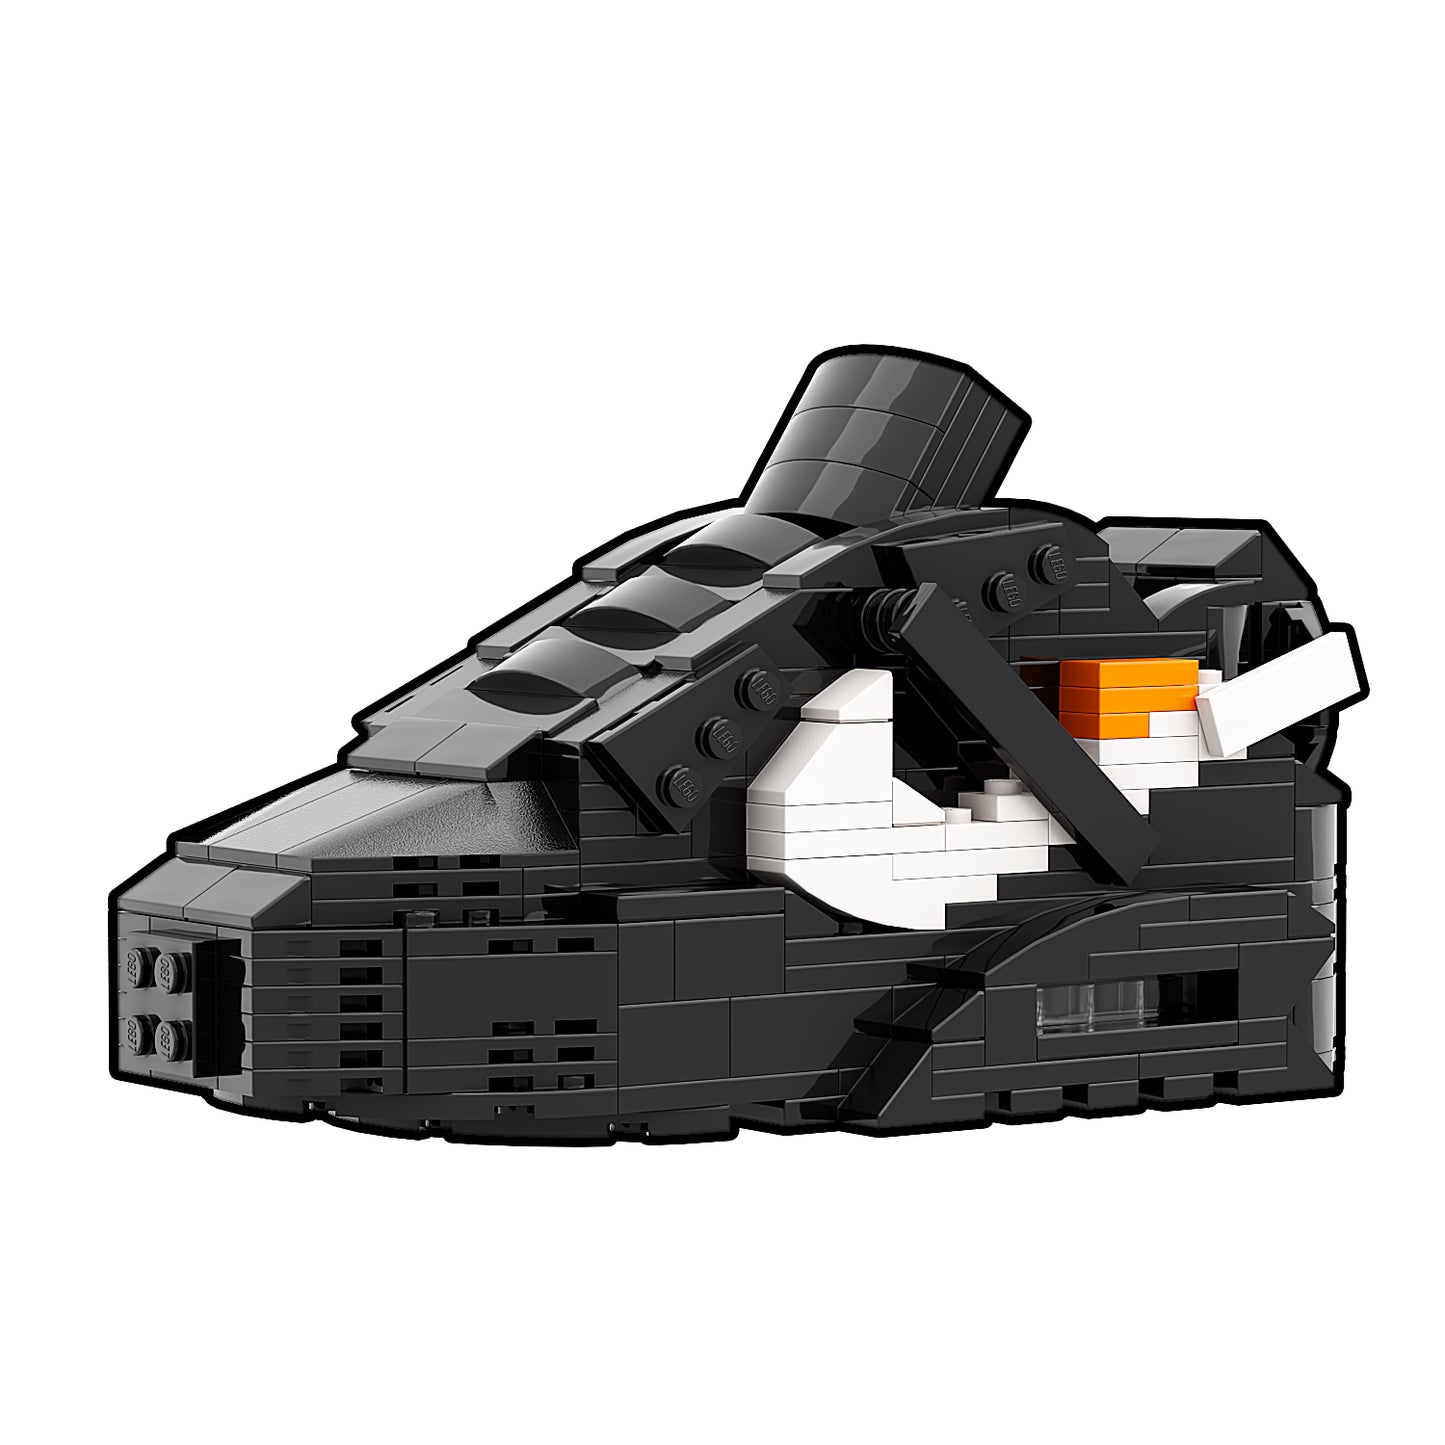 REGULAR Air Max 90 "Off-White Black" Sneaker Bricks with Mini Figure